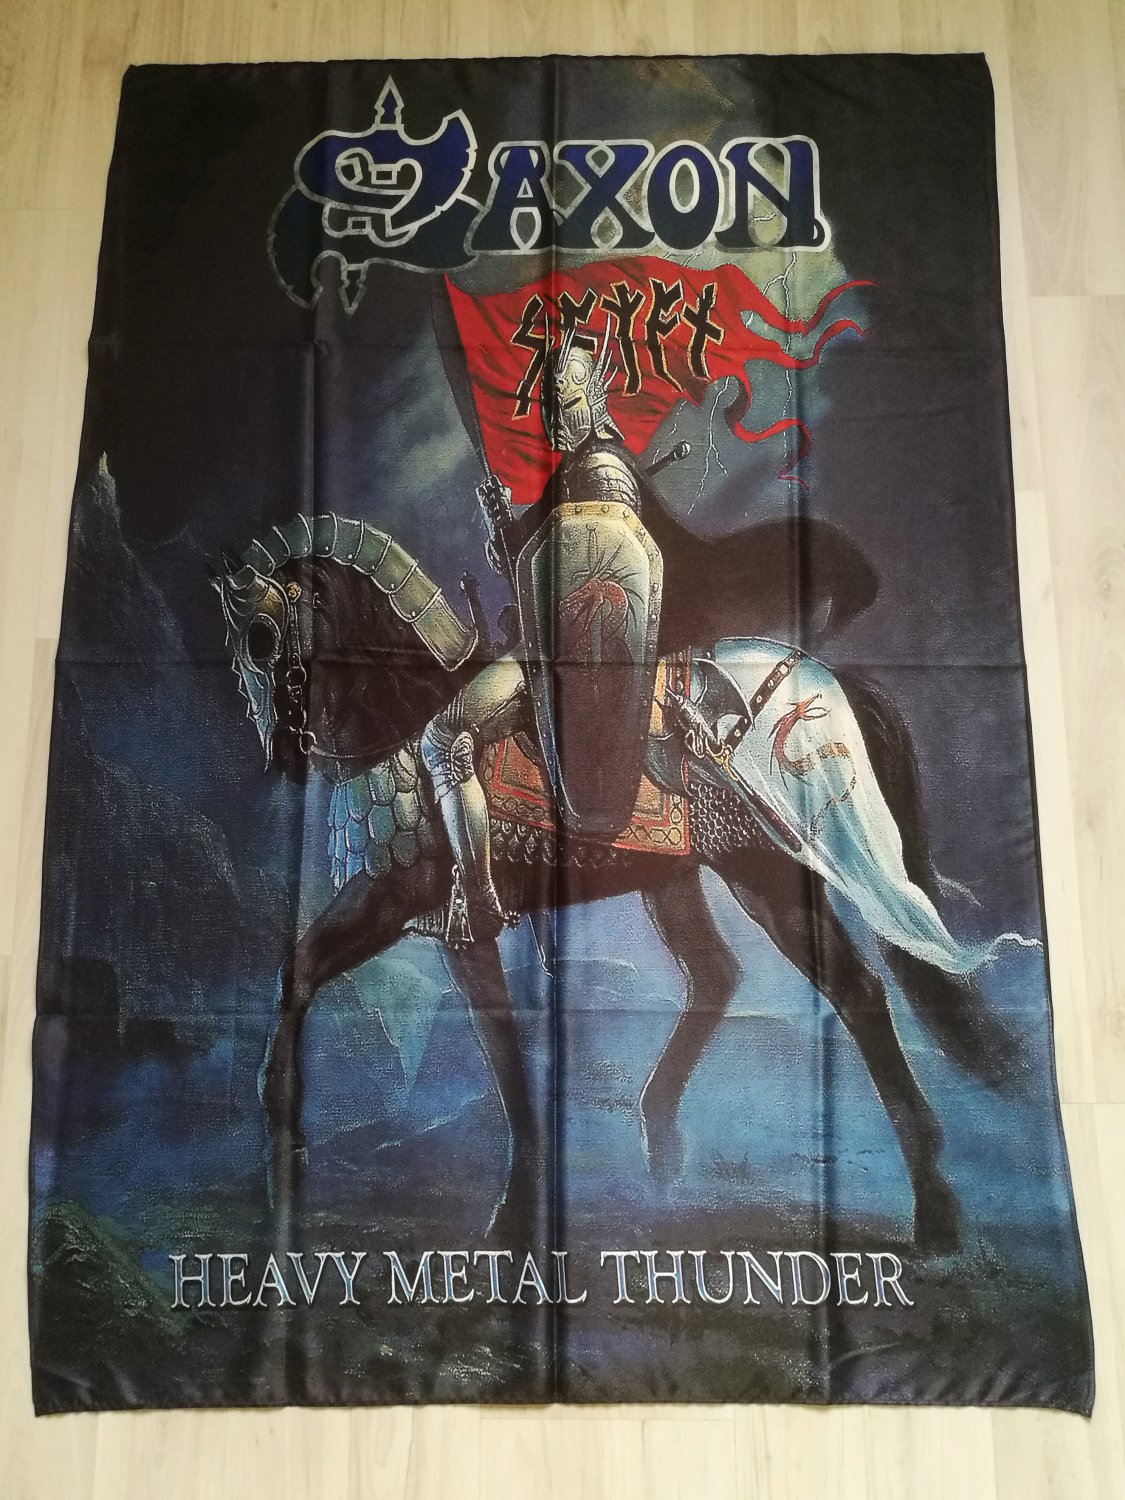 SAXON - Heavy metal thunder FLAG cloth POSTER Banner Heavy METAL NWOBHM Maiden